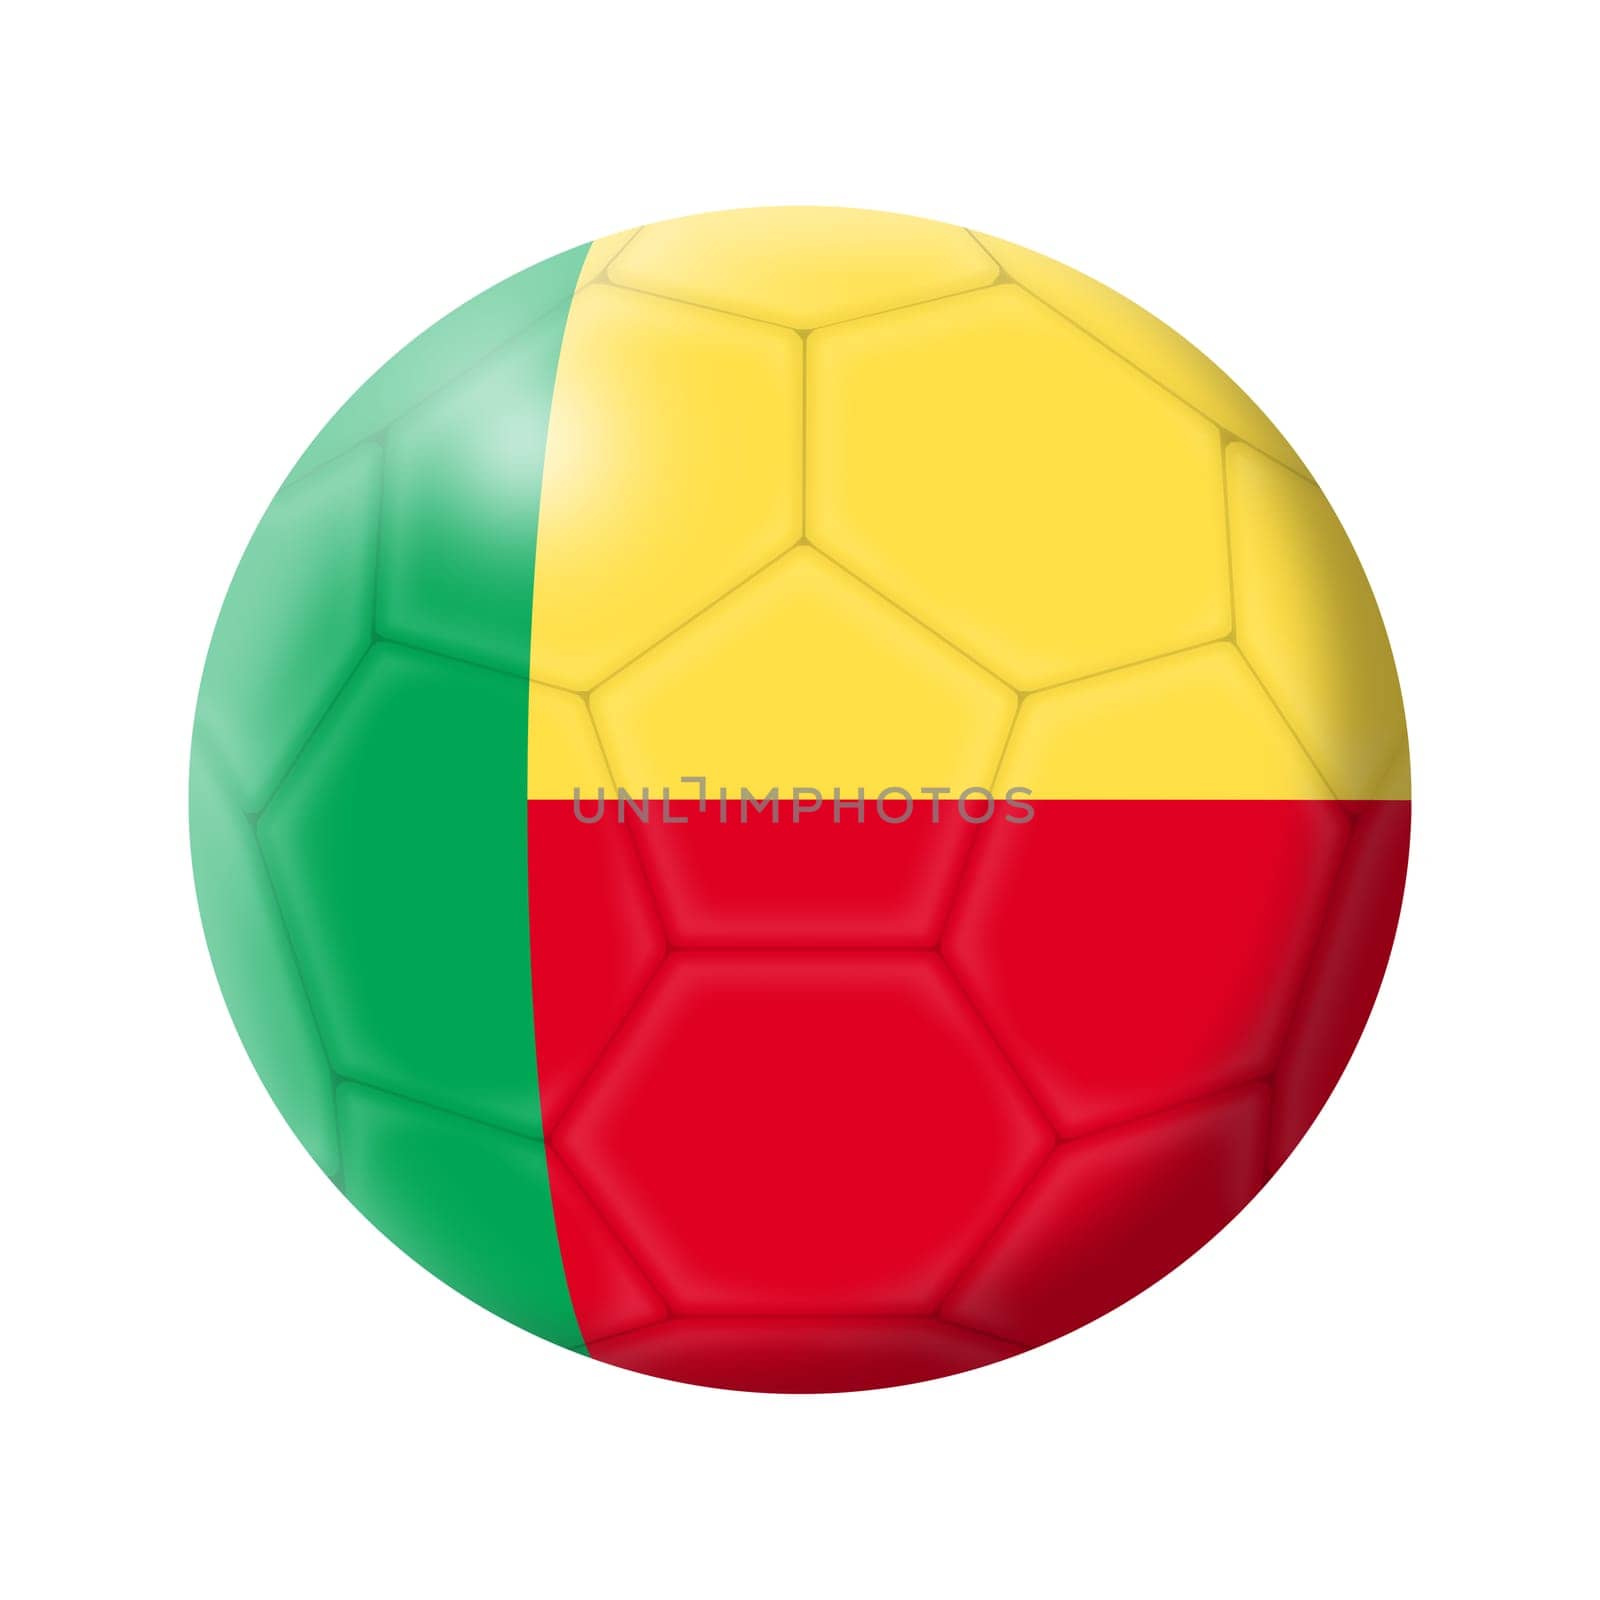 Benin soccer ball football illustration by VivacityImages